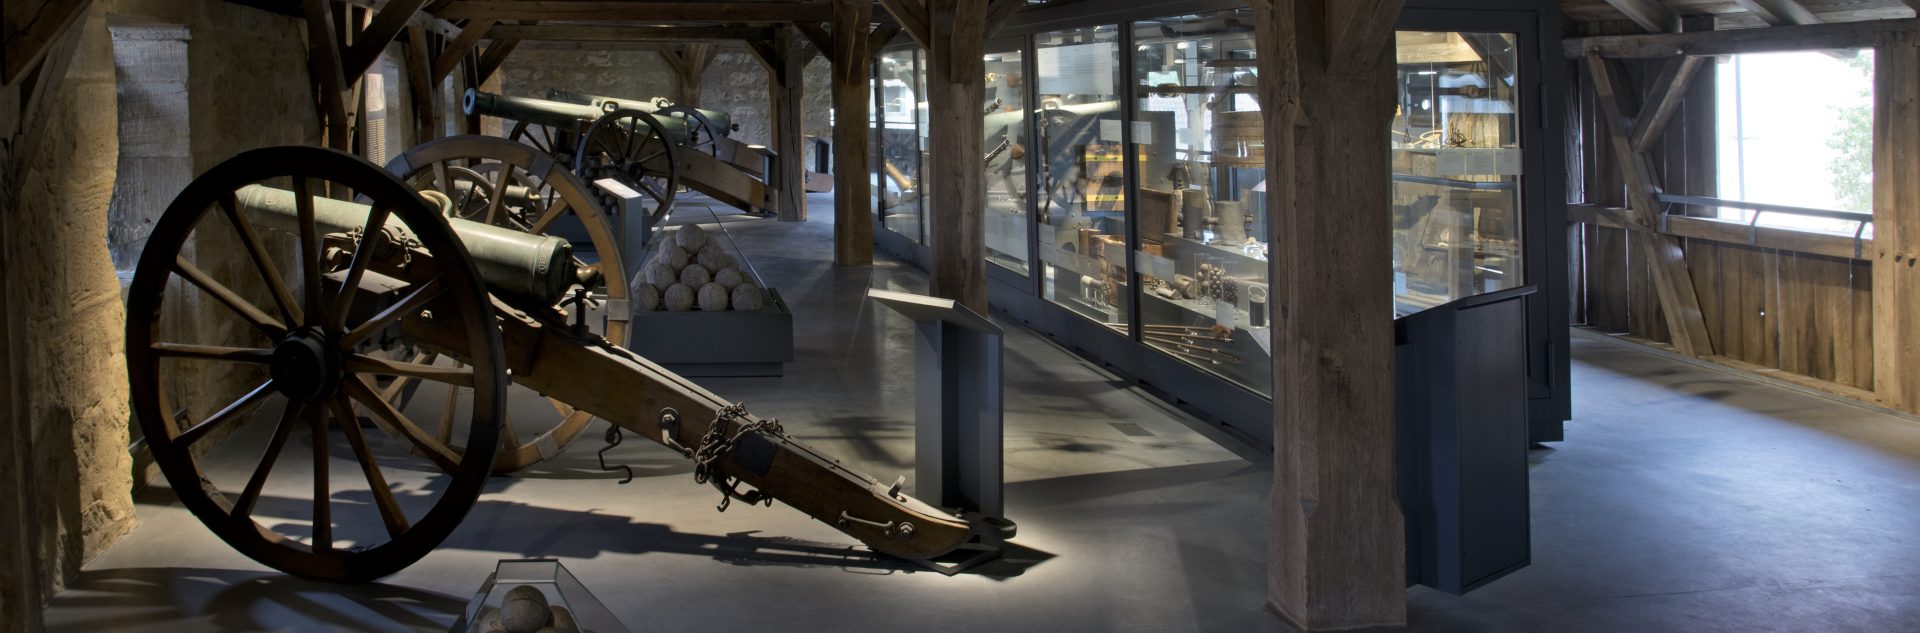 Artillerieausstellung Veste Coburg